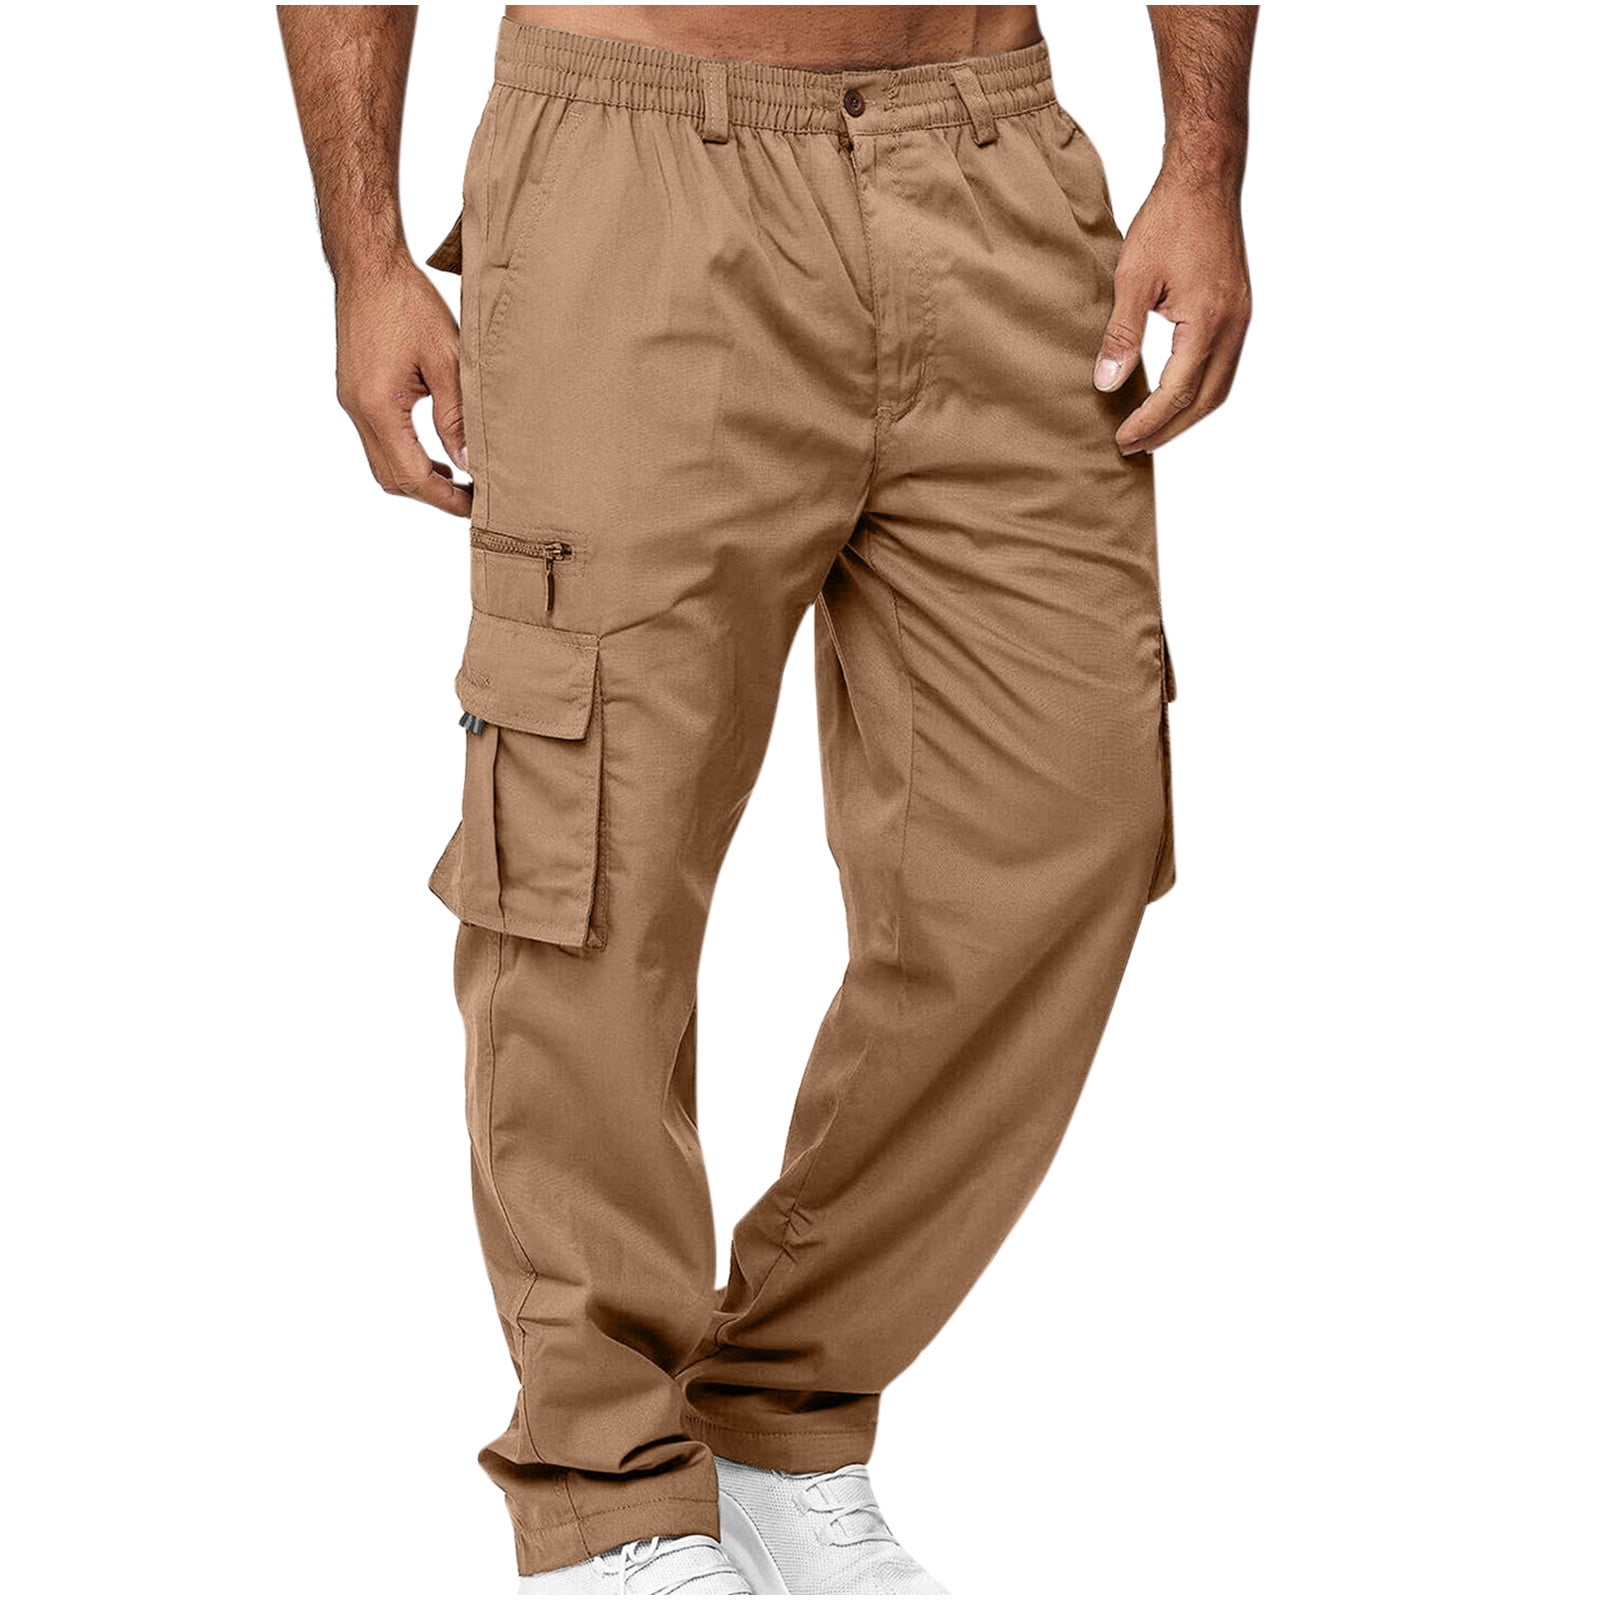 Lolmot Cargo Pants for Men Relaxed Fit Causal Slim Beach Work Streetwear  Khaki Baggy Pants with Zipper Pockets